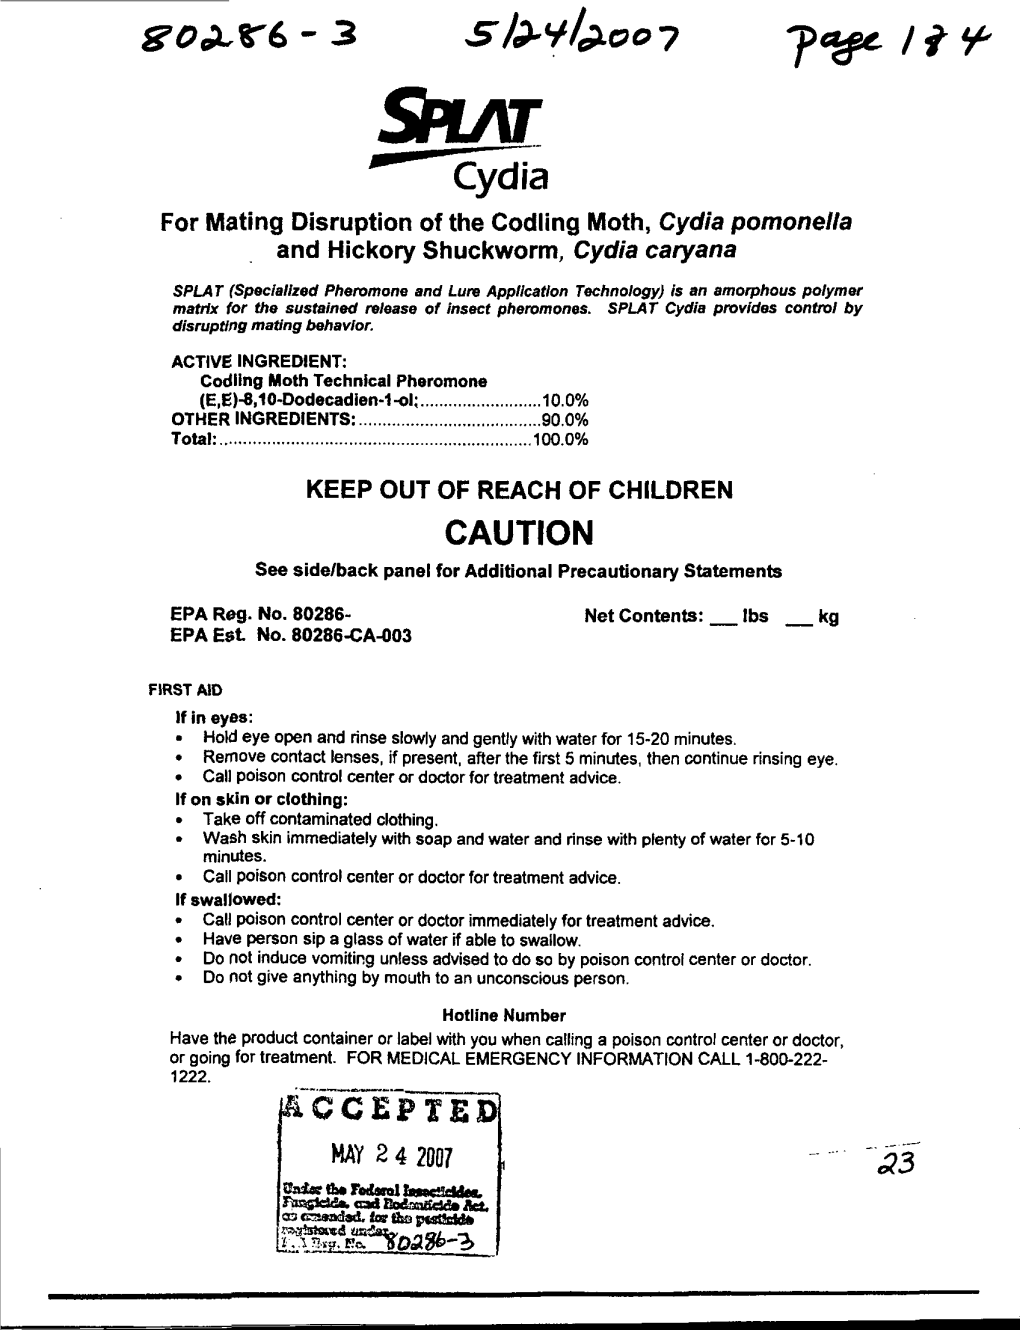 U.S. EPA, Pesticide Product Label, SPLAT CYDIA, 05/24/2007